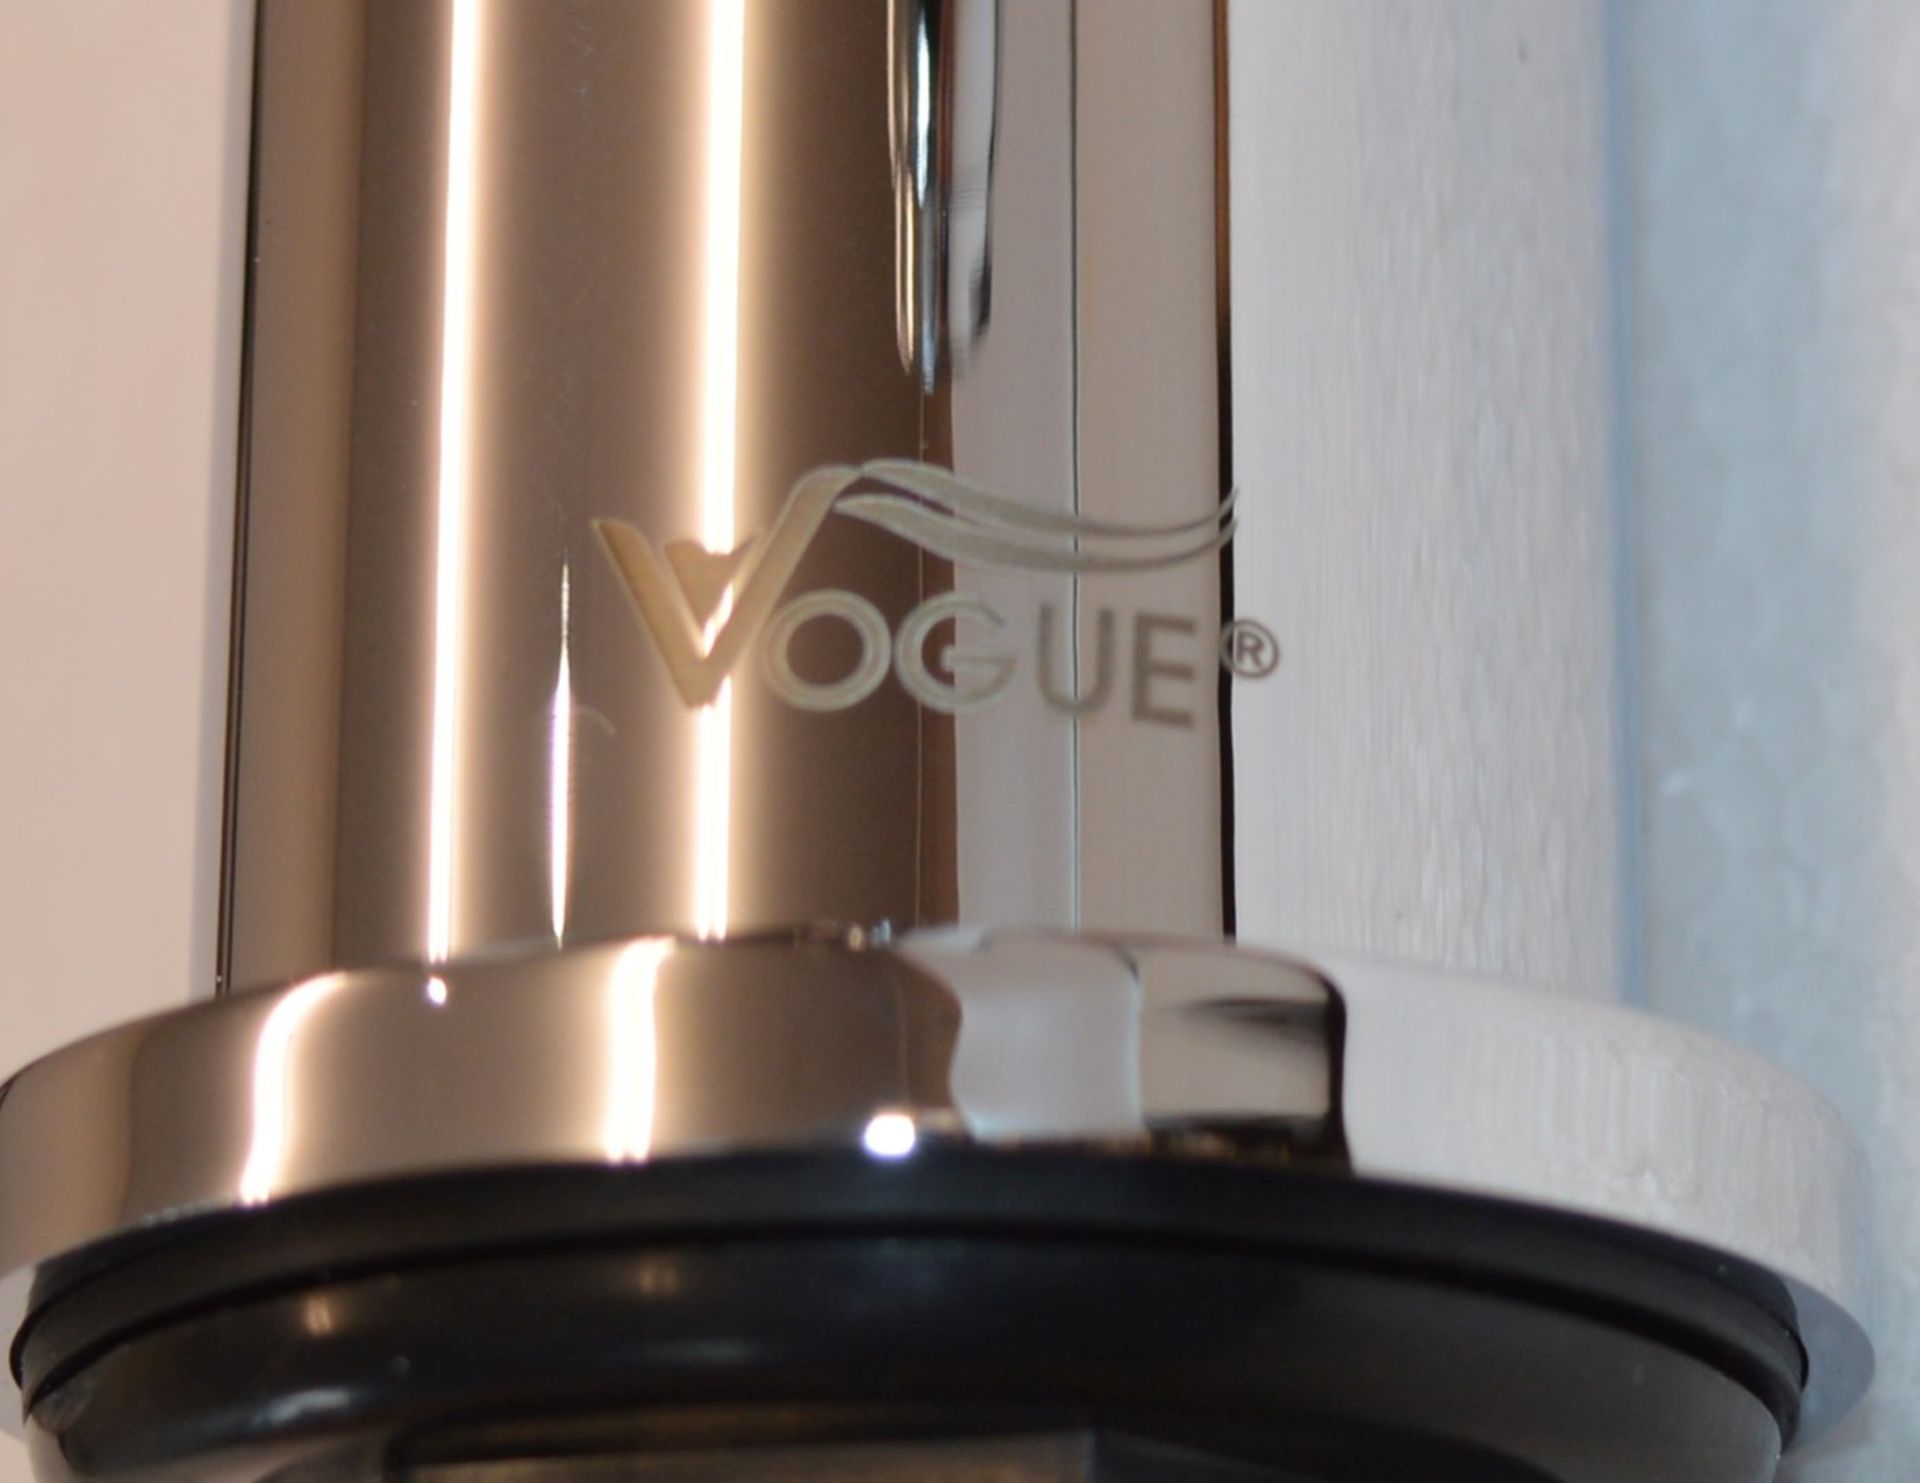 1 x Series 5 BATH TAPS - Vogue Bathrooms Platinum Brassware Collection - Pair of - Contemporary - Image 6 of 8